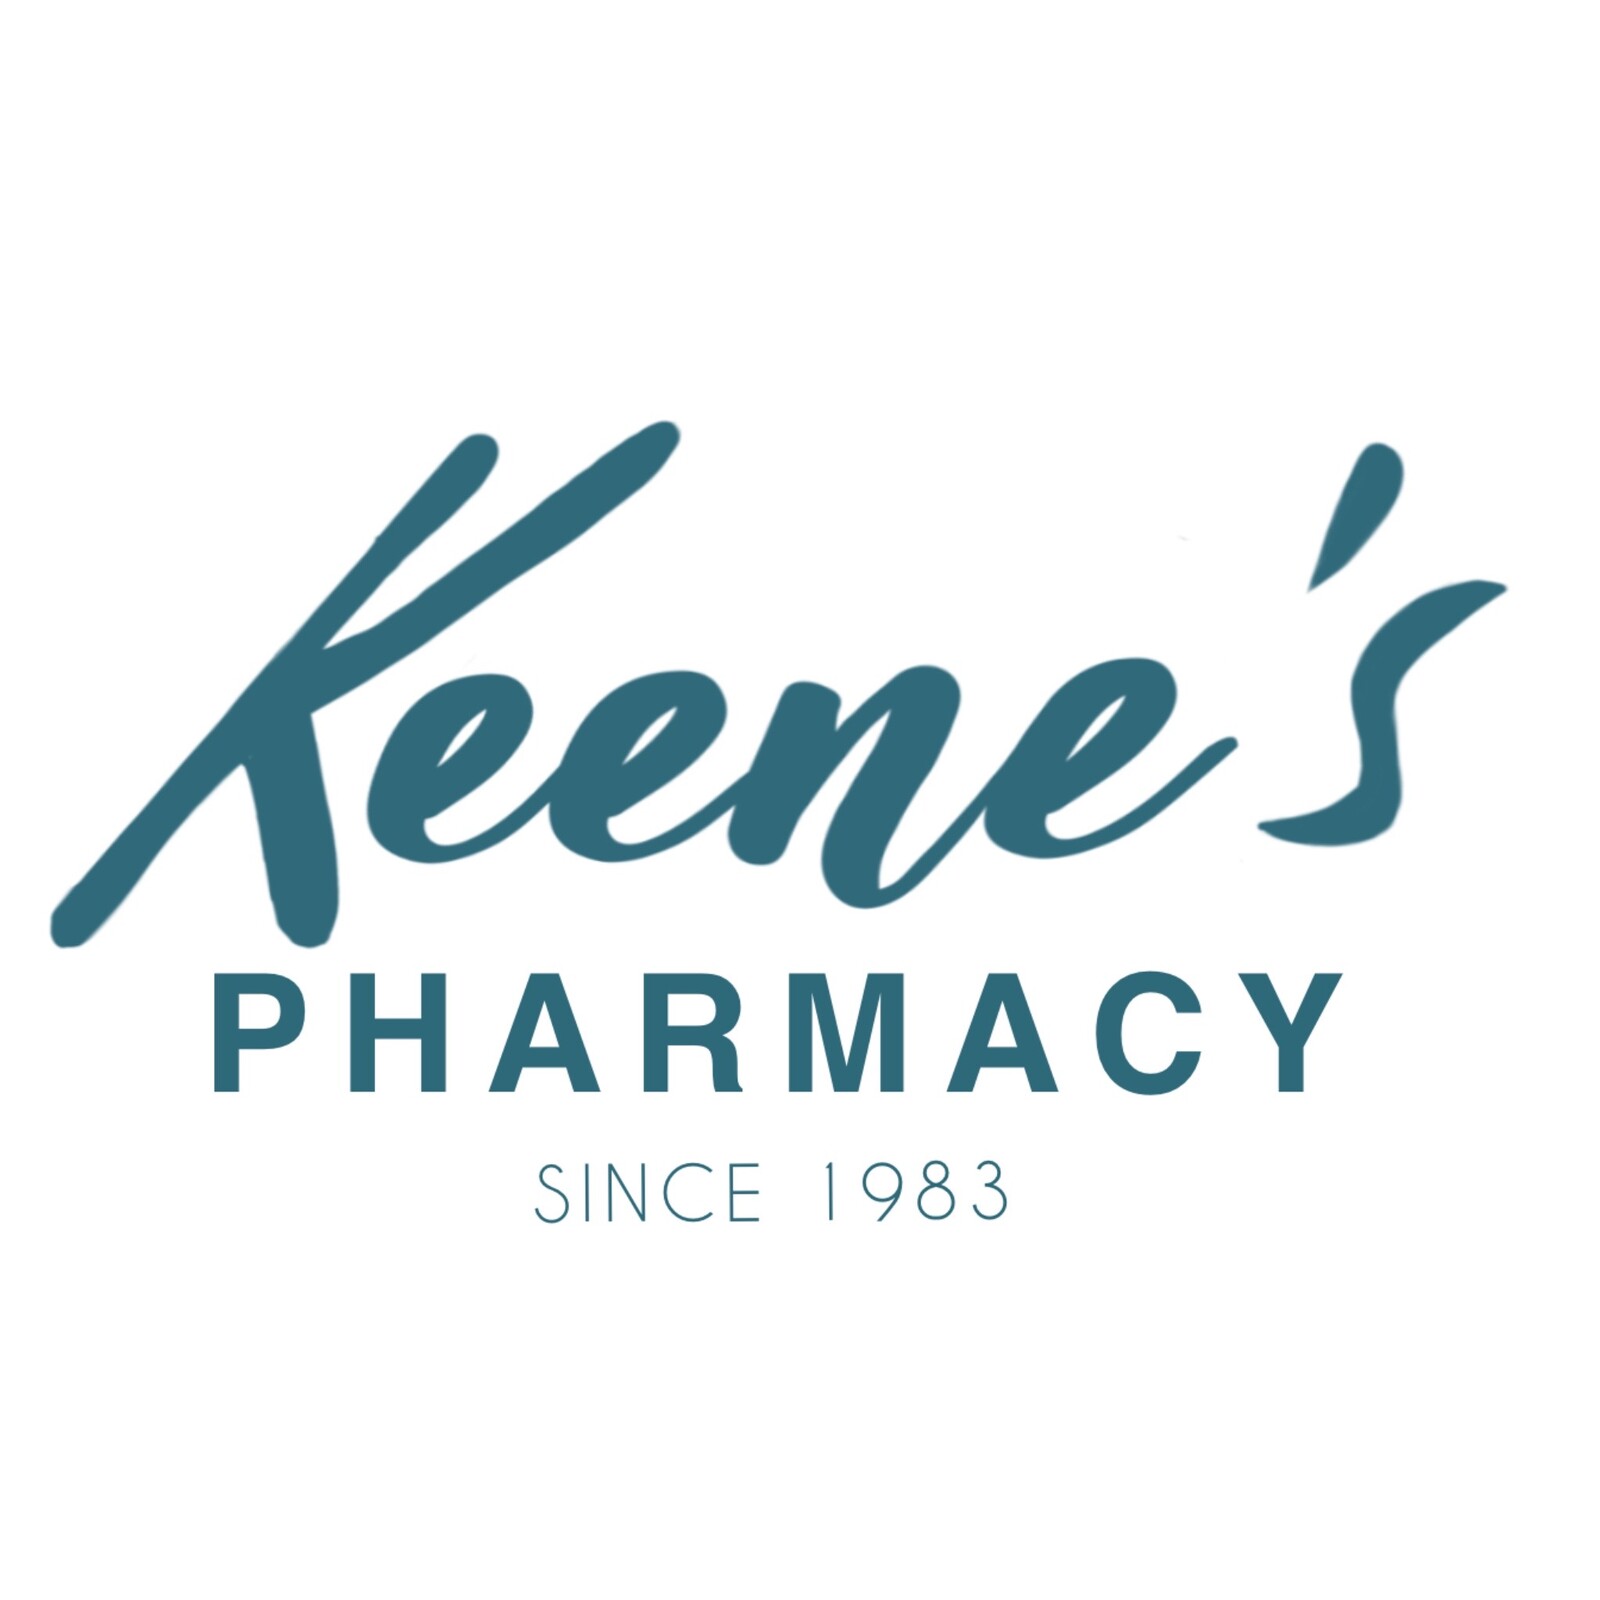 Keenes Pharmacy Logo